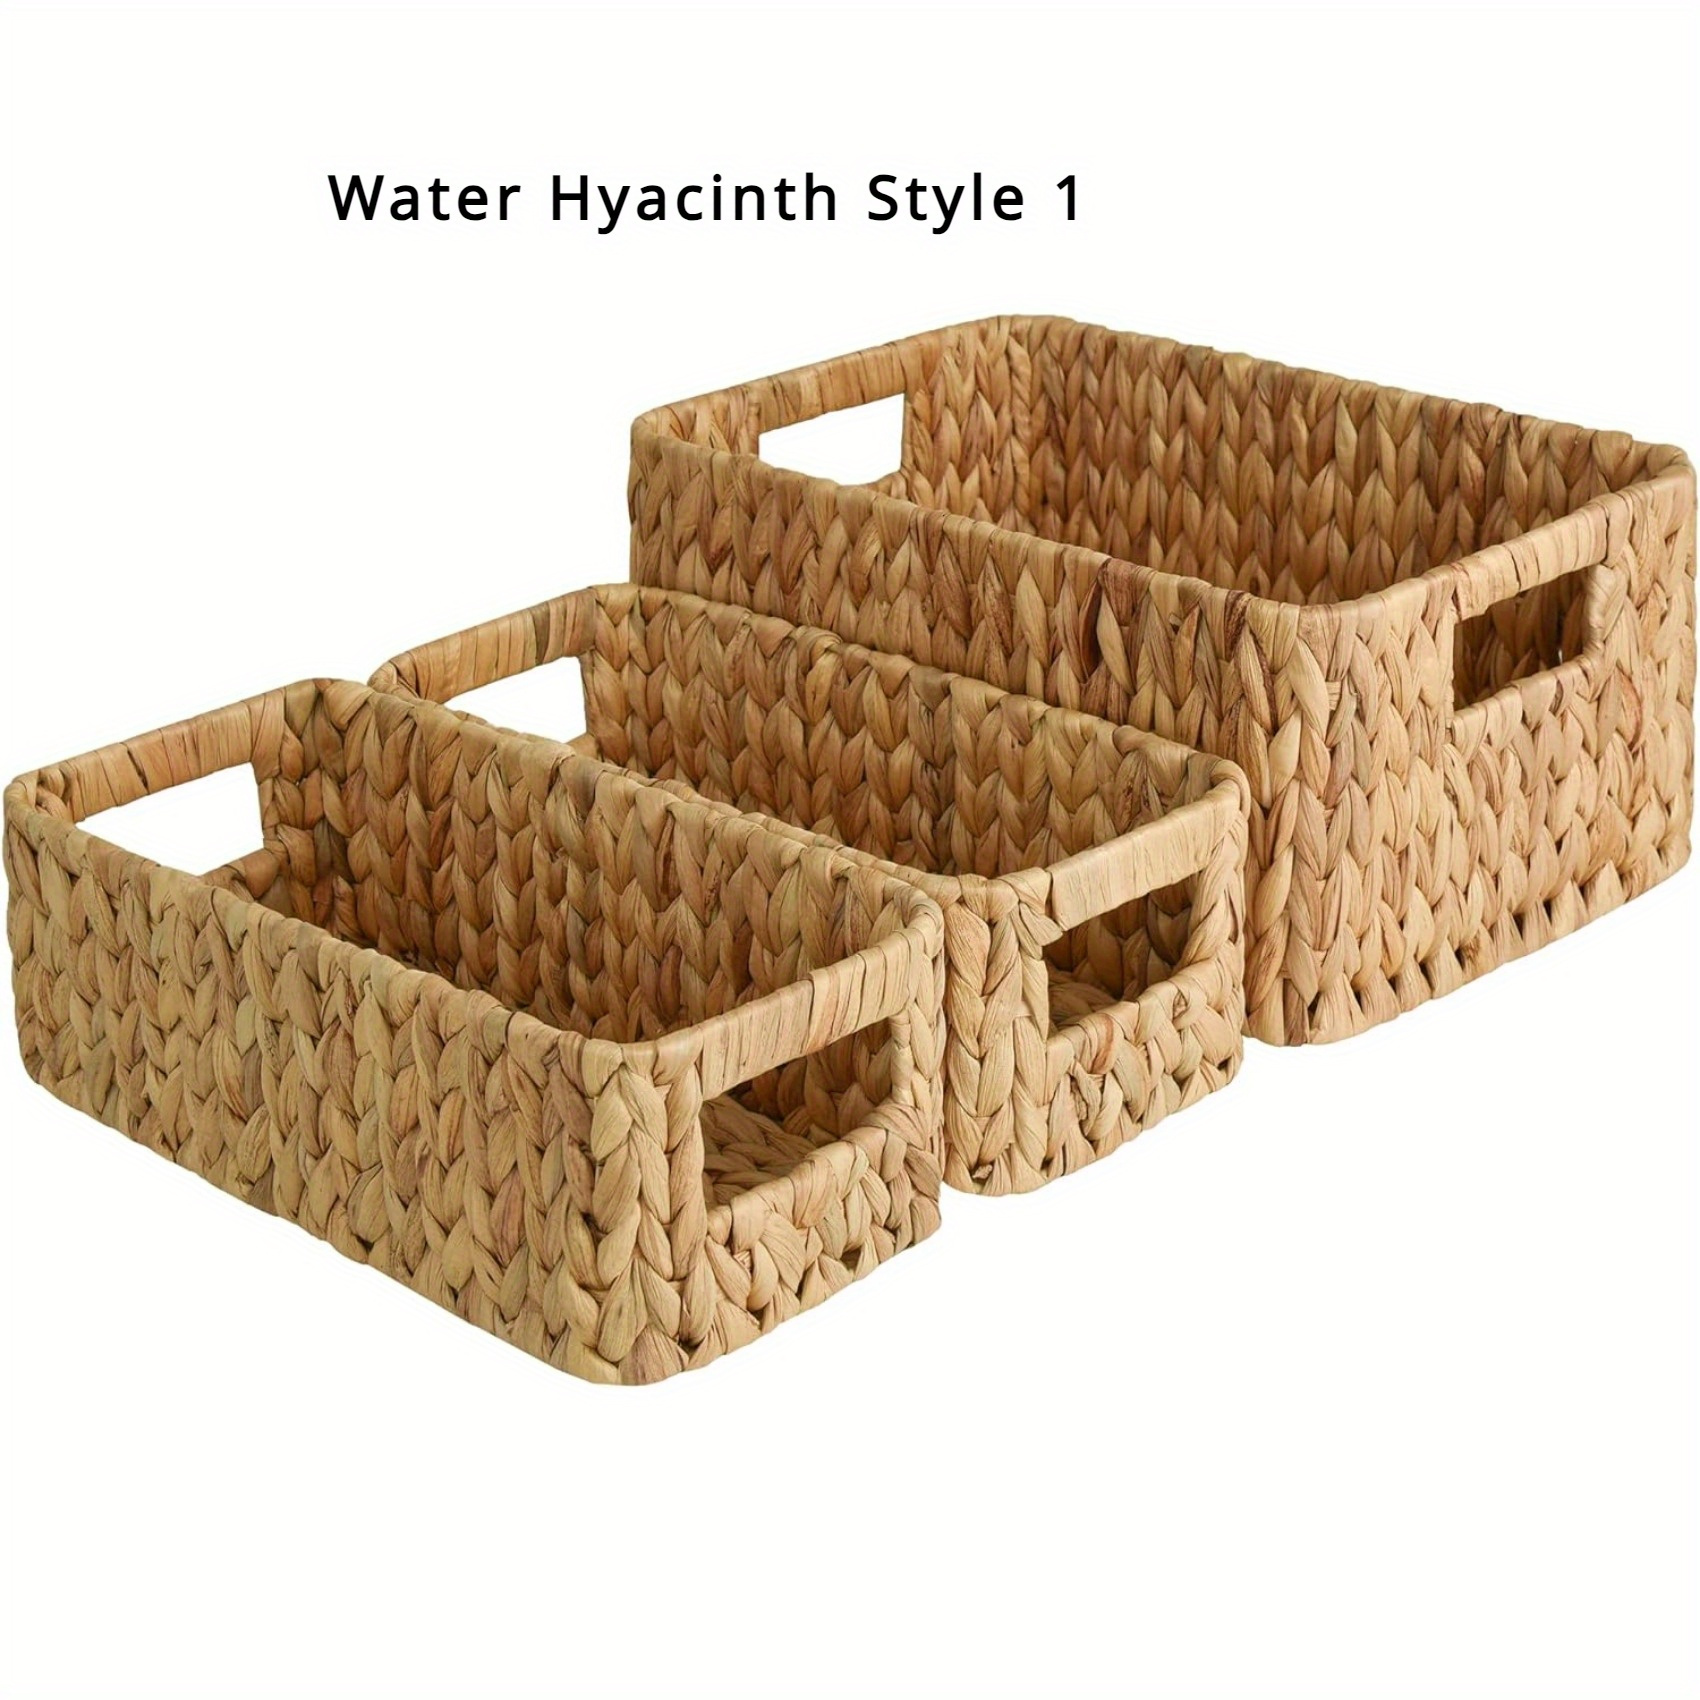 

Storageworks Wicker Storage Baskets For Shelves, Water Hyacinth Storage Baskets For Organizing, Wicker Basket For Bathroom Set Of 3 (1pc Large, 2pcs Medium)